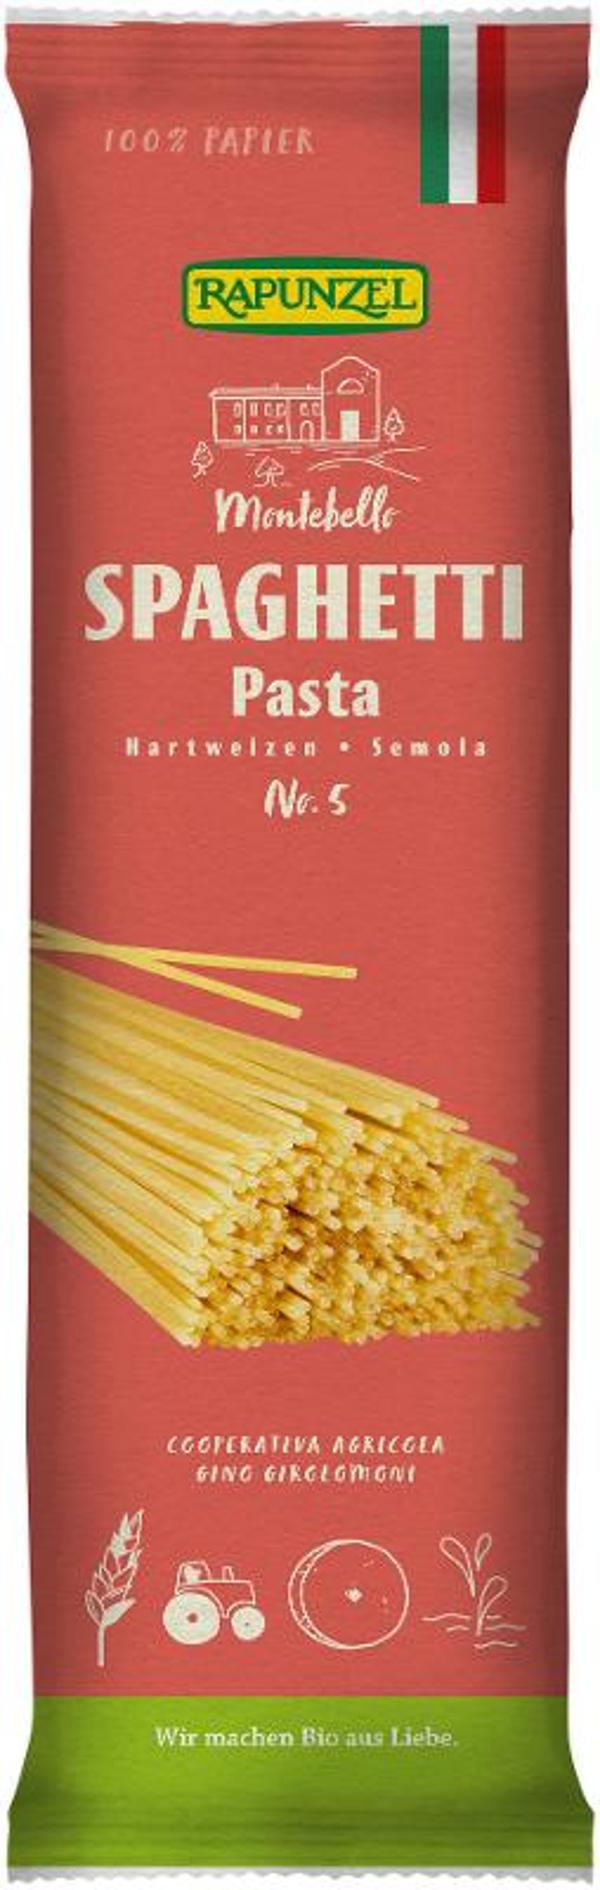 Produktfoto zu Spaghetti Semola, no.5 500g Rapunzel